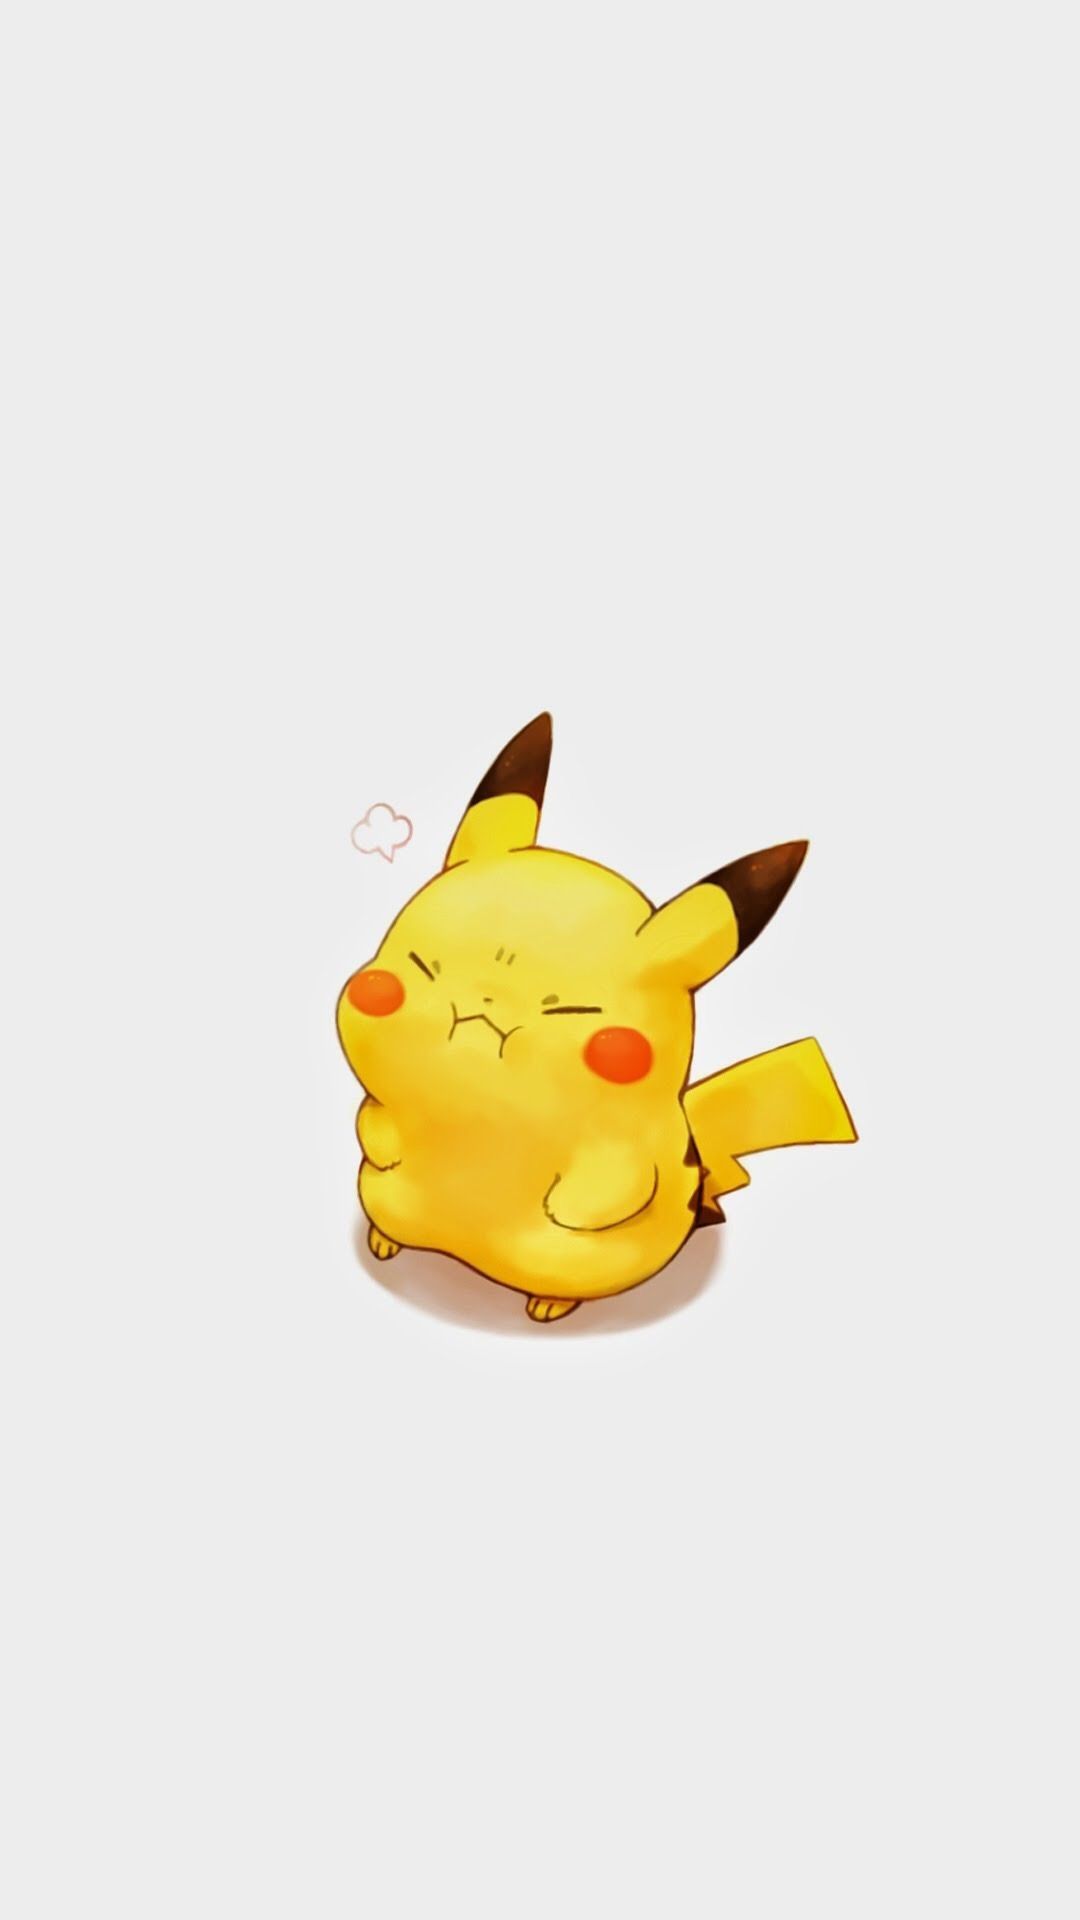 Cute Kawaii Adorable Anime Wallpaper Pikachu